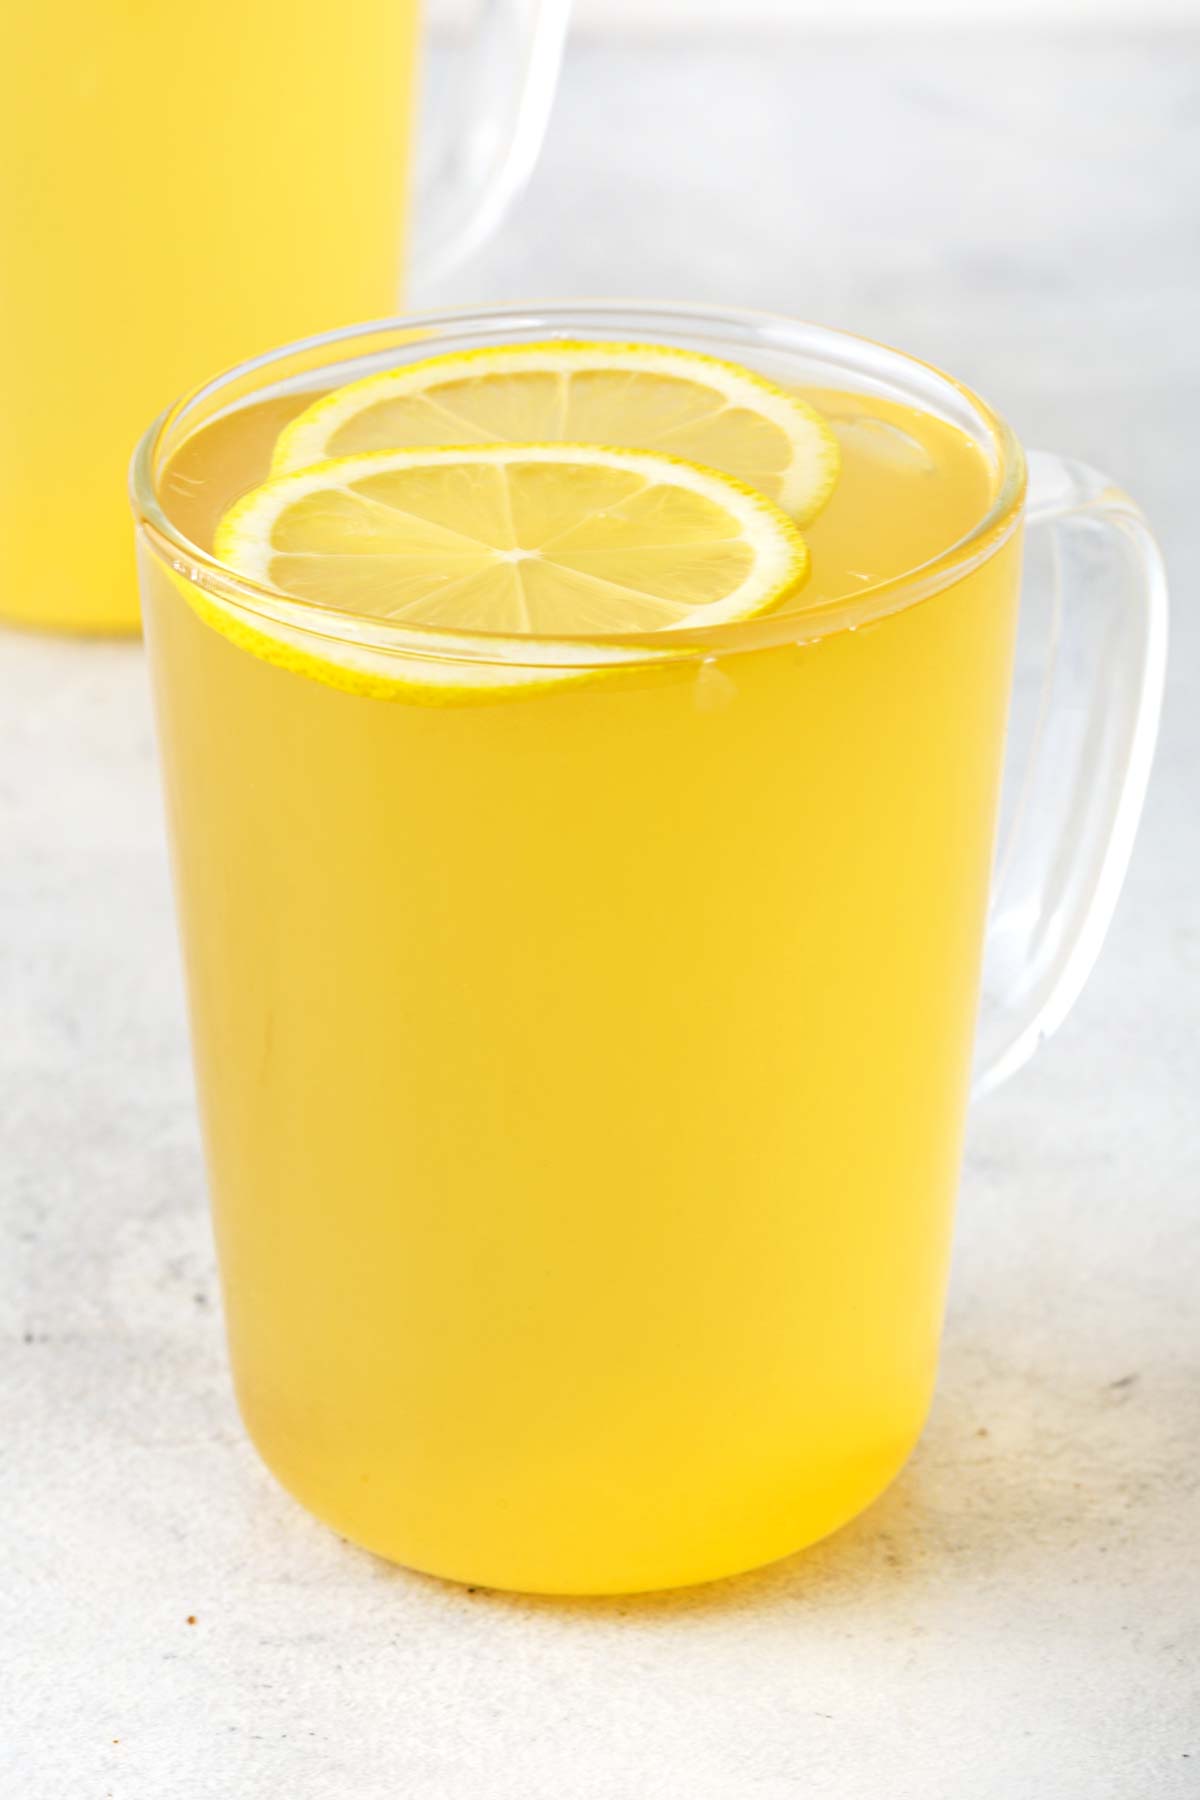 Lemon Tea with lemon slices in clear mug.